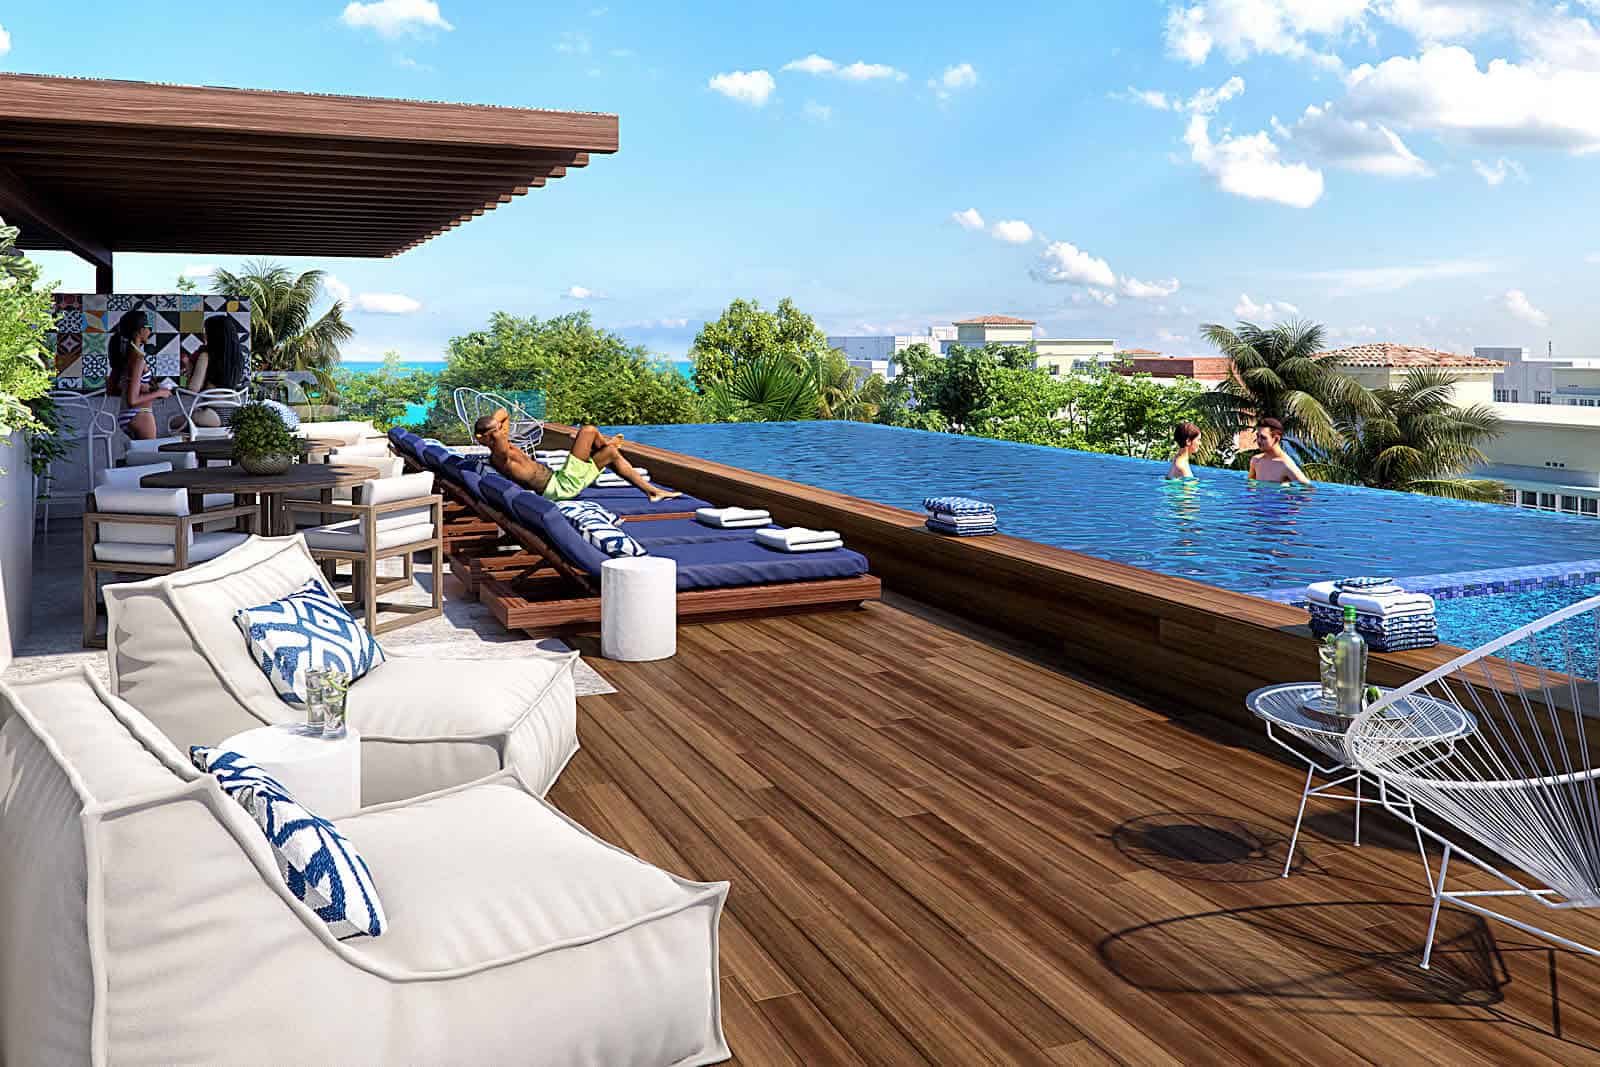 Piedrazul rooftop pool & lounge